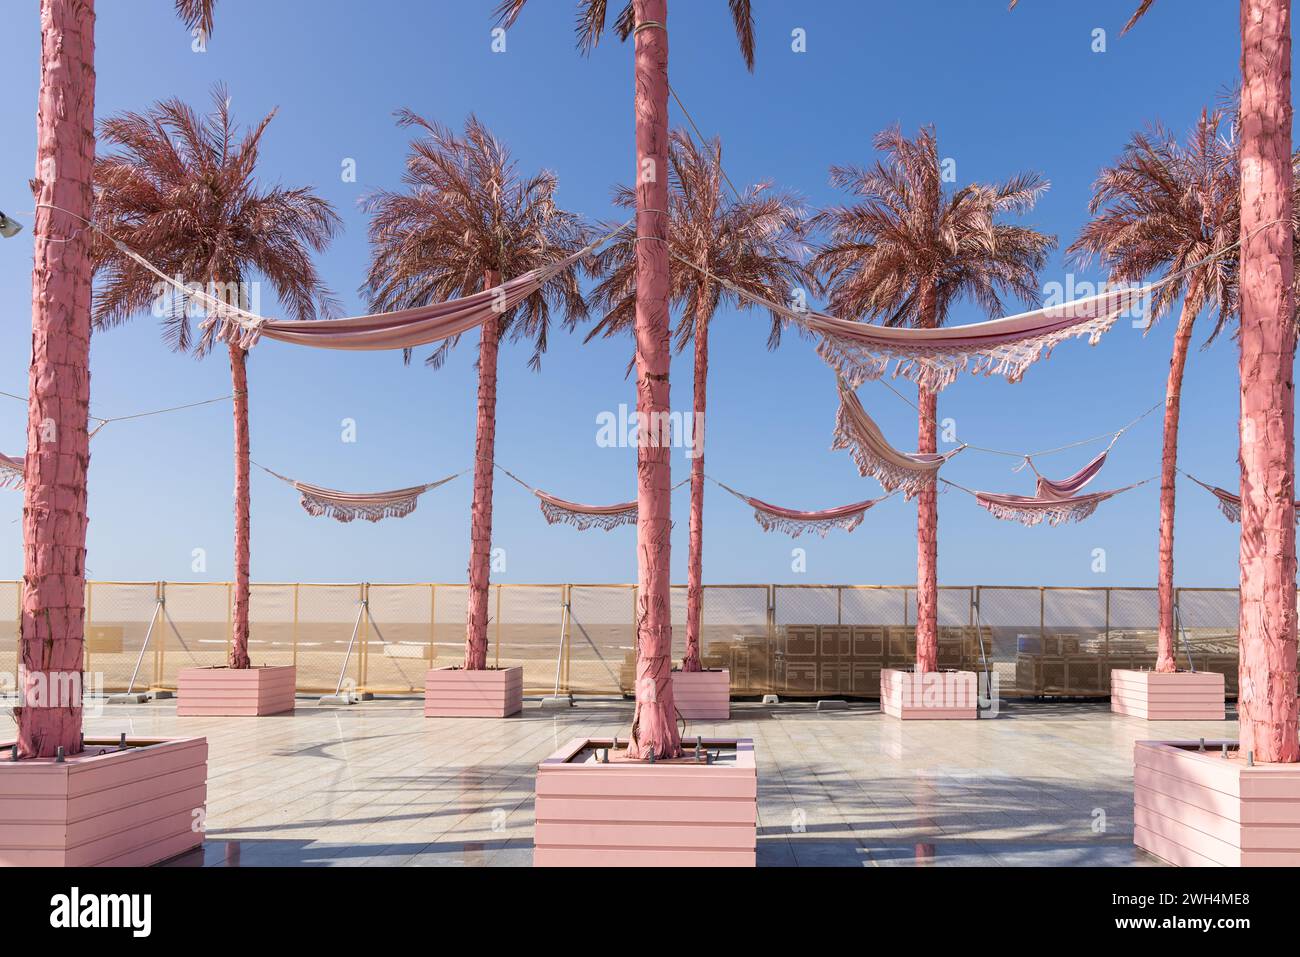 Naher Osten, Saudi-Arabien, Provinz Mekka, Dschidda. Pinkfarbene Palmen am Ufer von Dschidda. Stockfoto